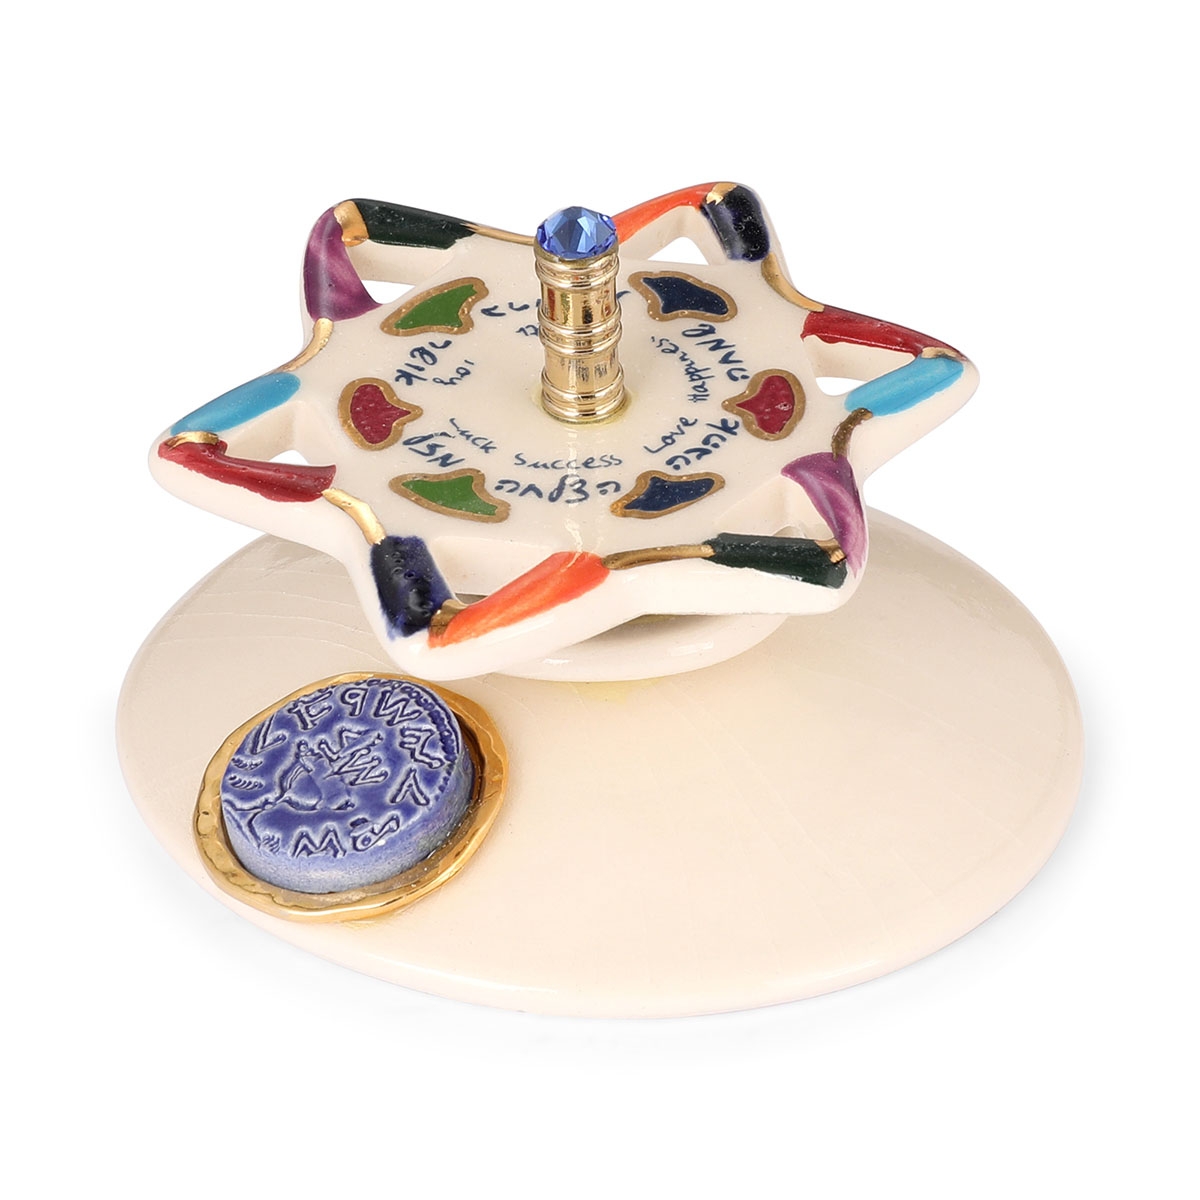 Designer Ceramic Star of David Dreidel With Hebrew-English Home Blessings - 1